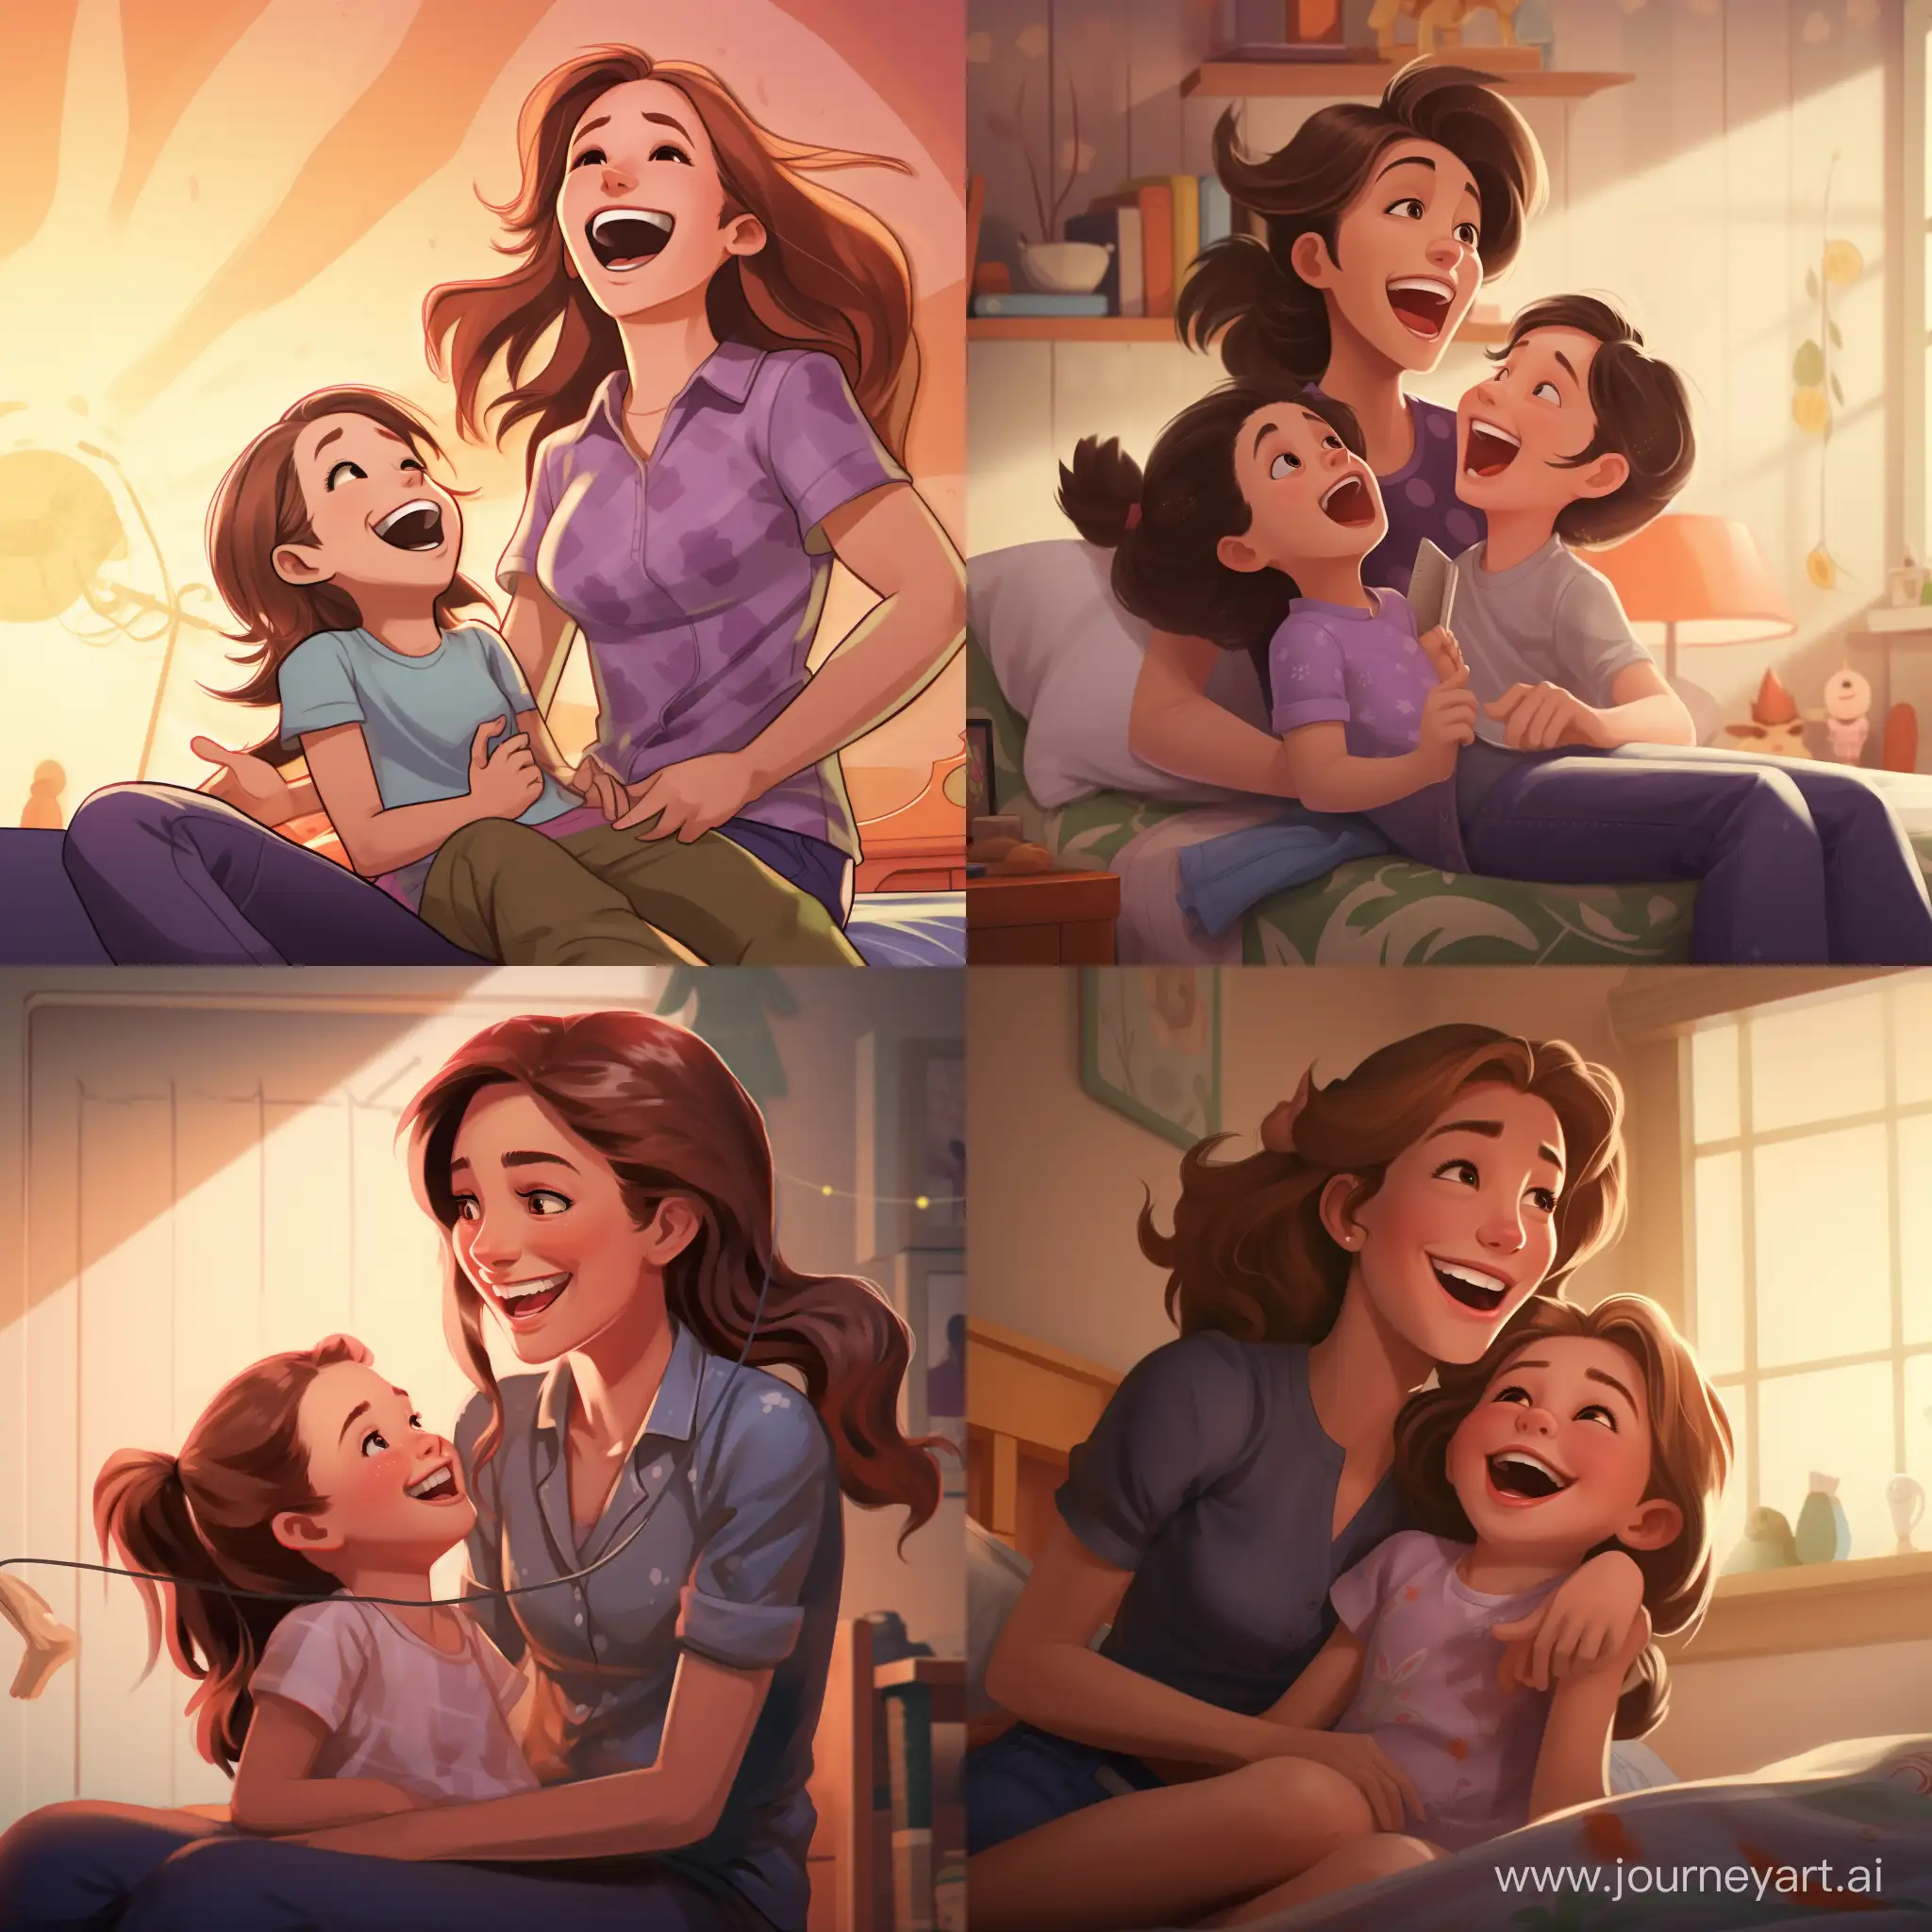 Joyful-MotherDaughter-Tickling-Moment-in-Disney-Animation-Style